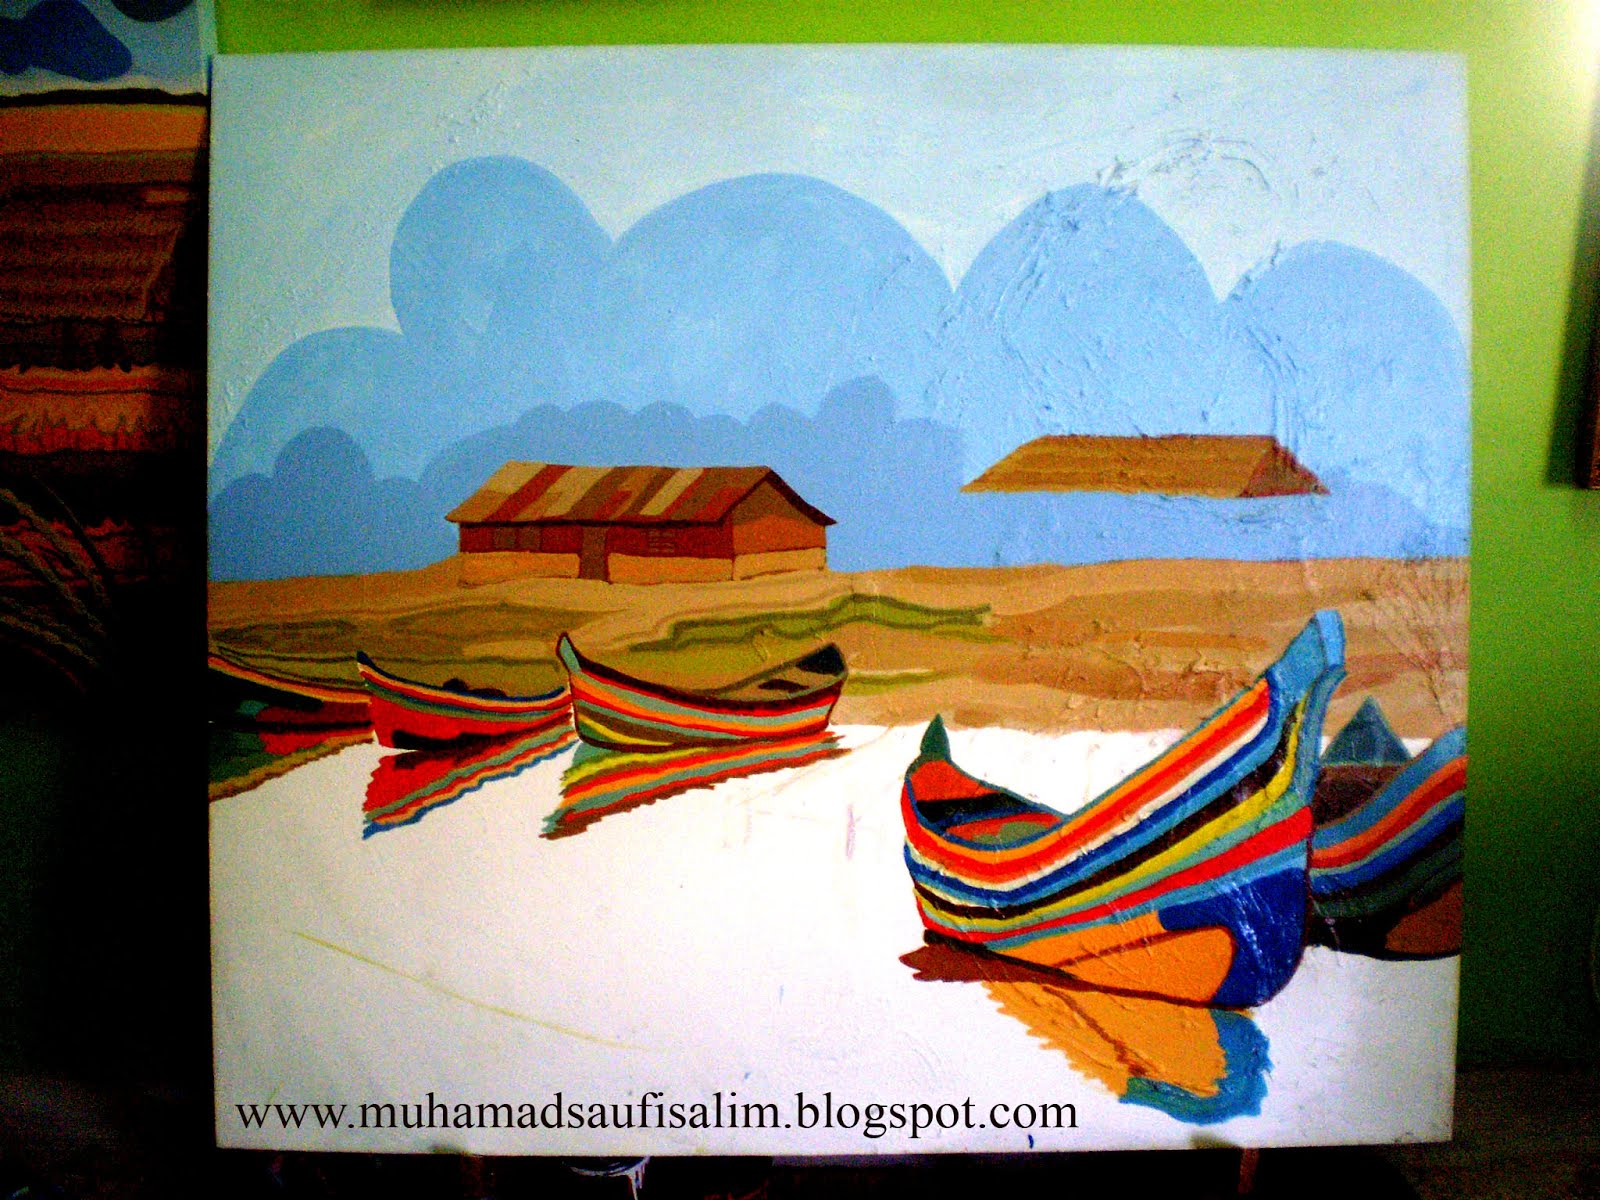 MUHAMAD SAUFI SALIM : MALAYSIA FINE ARTS, MALAYSIAN FINE ARTS ARTIST, VISUAL ARTIST,